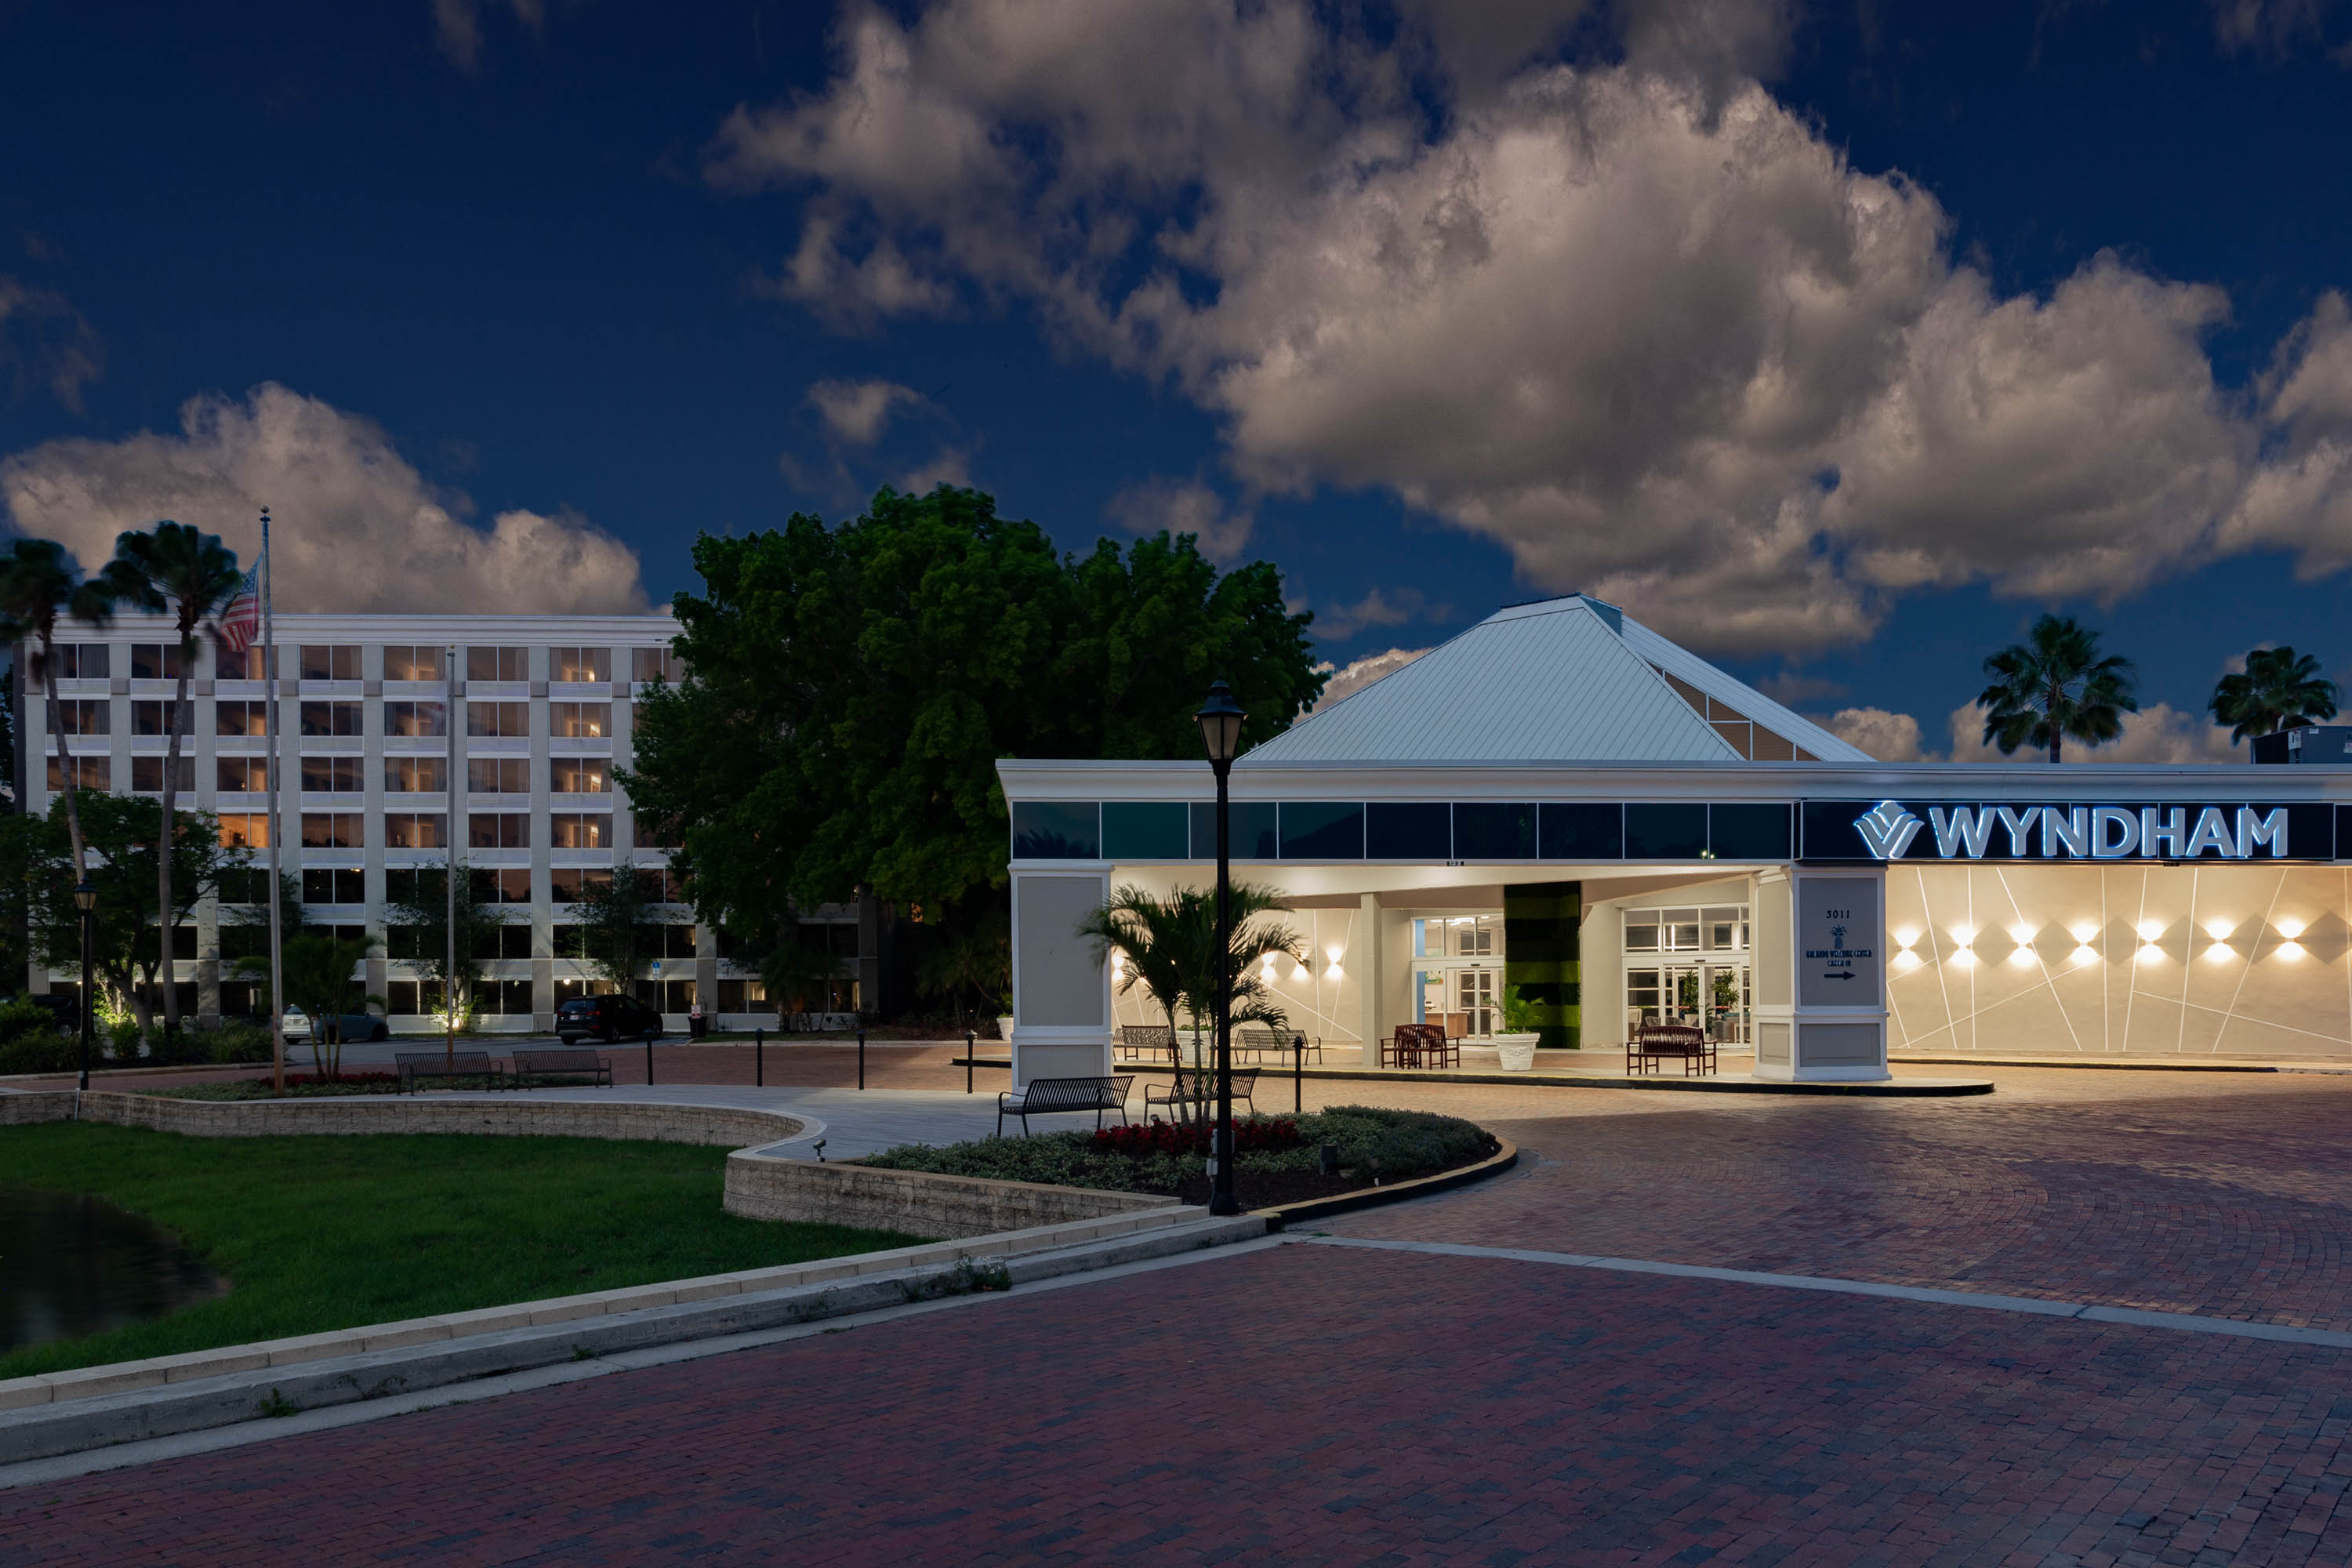 Wyndham Orlando Resort & Conference Center Celebration Area Kissimmee